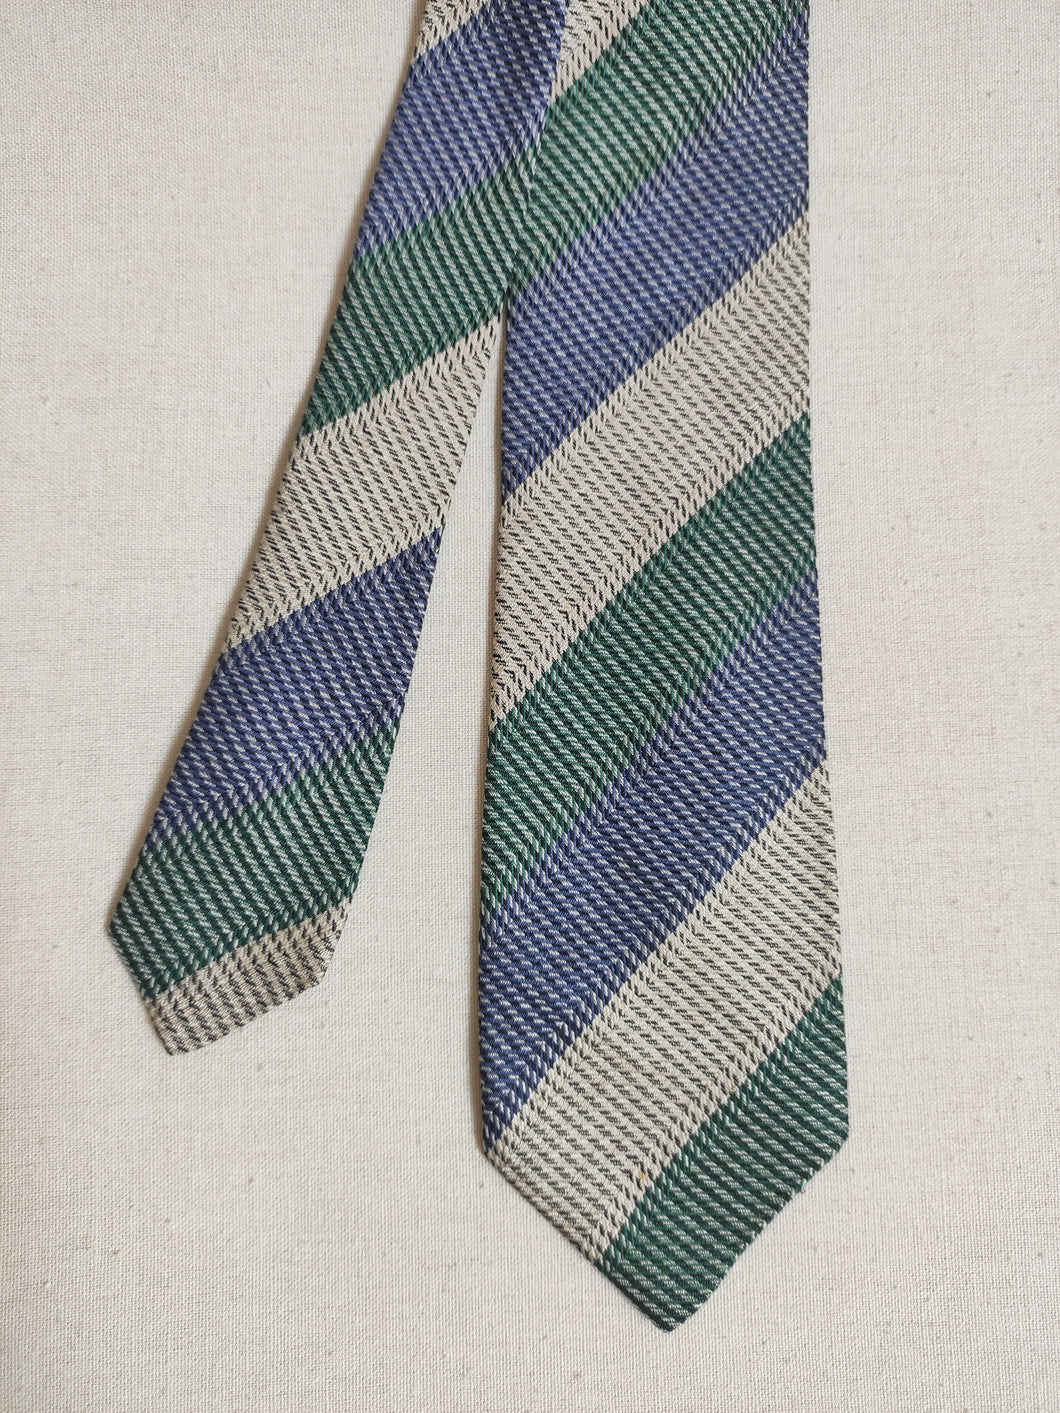 Trussardi cravate vintage en lin et soie Made in italy